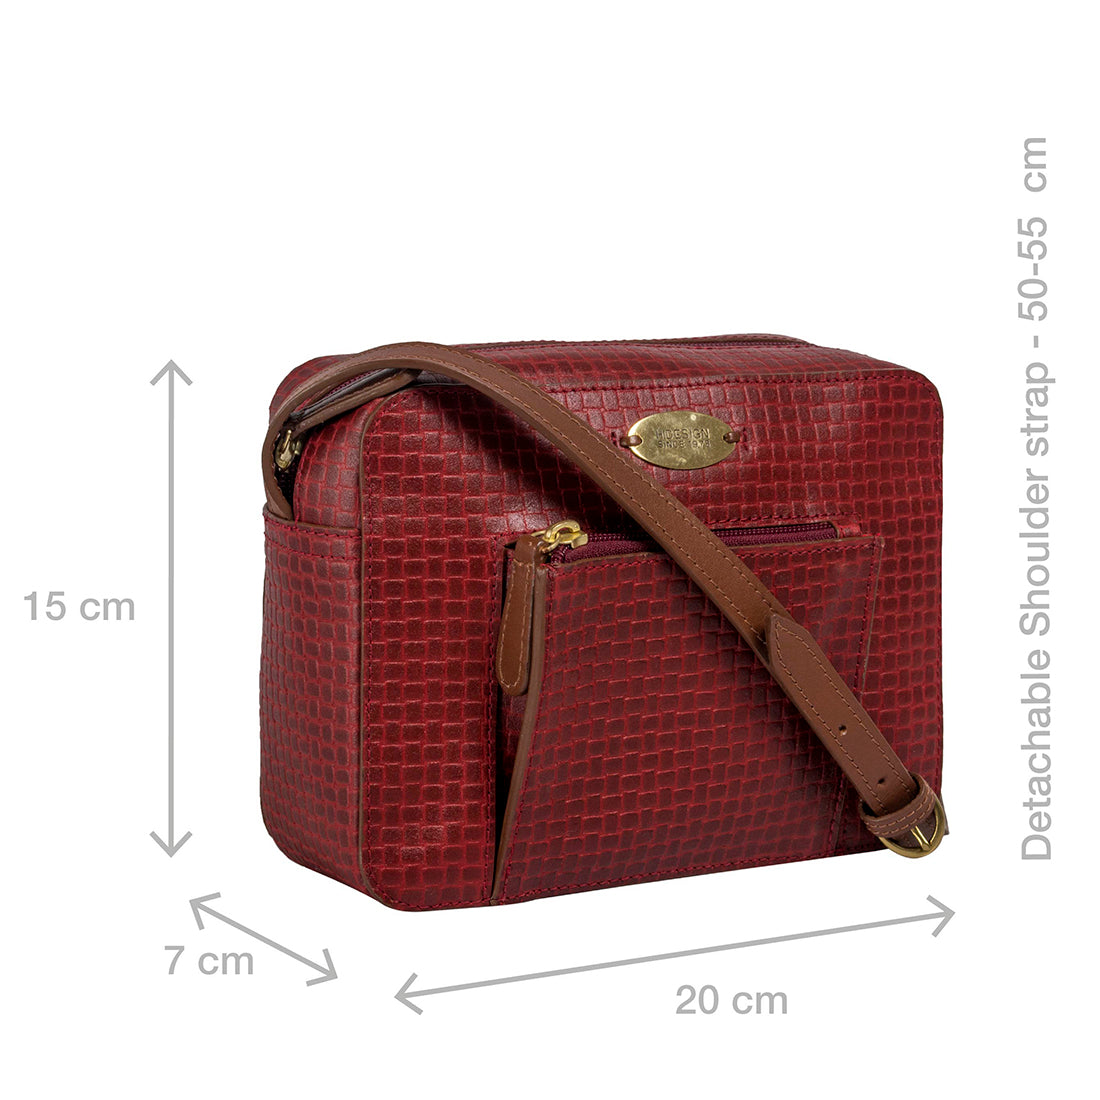 HIDESIGN Small Bags & Handbags for Women for sale | eBay